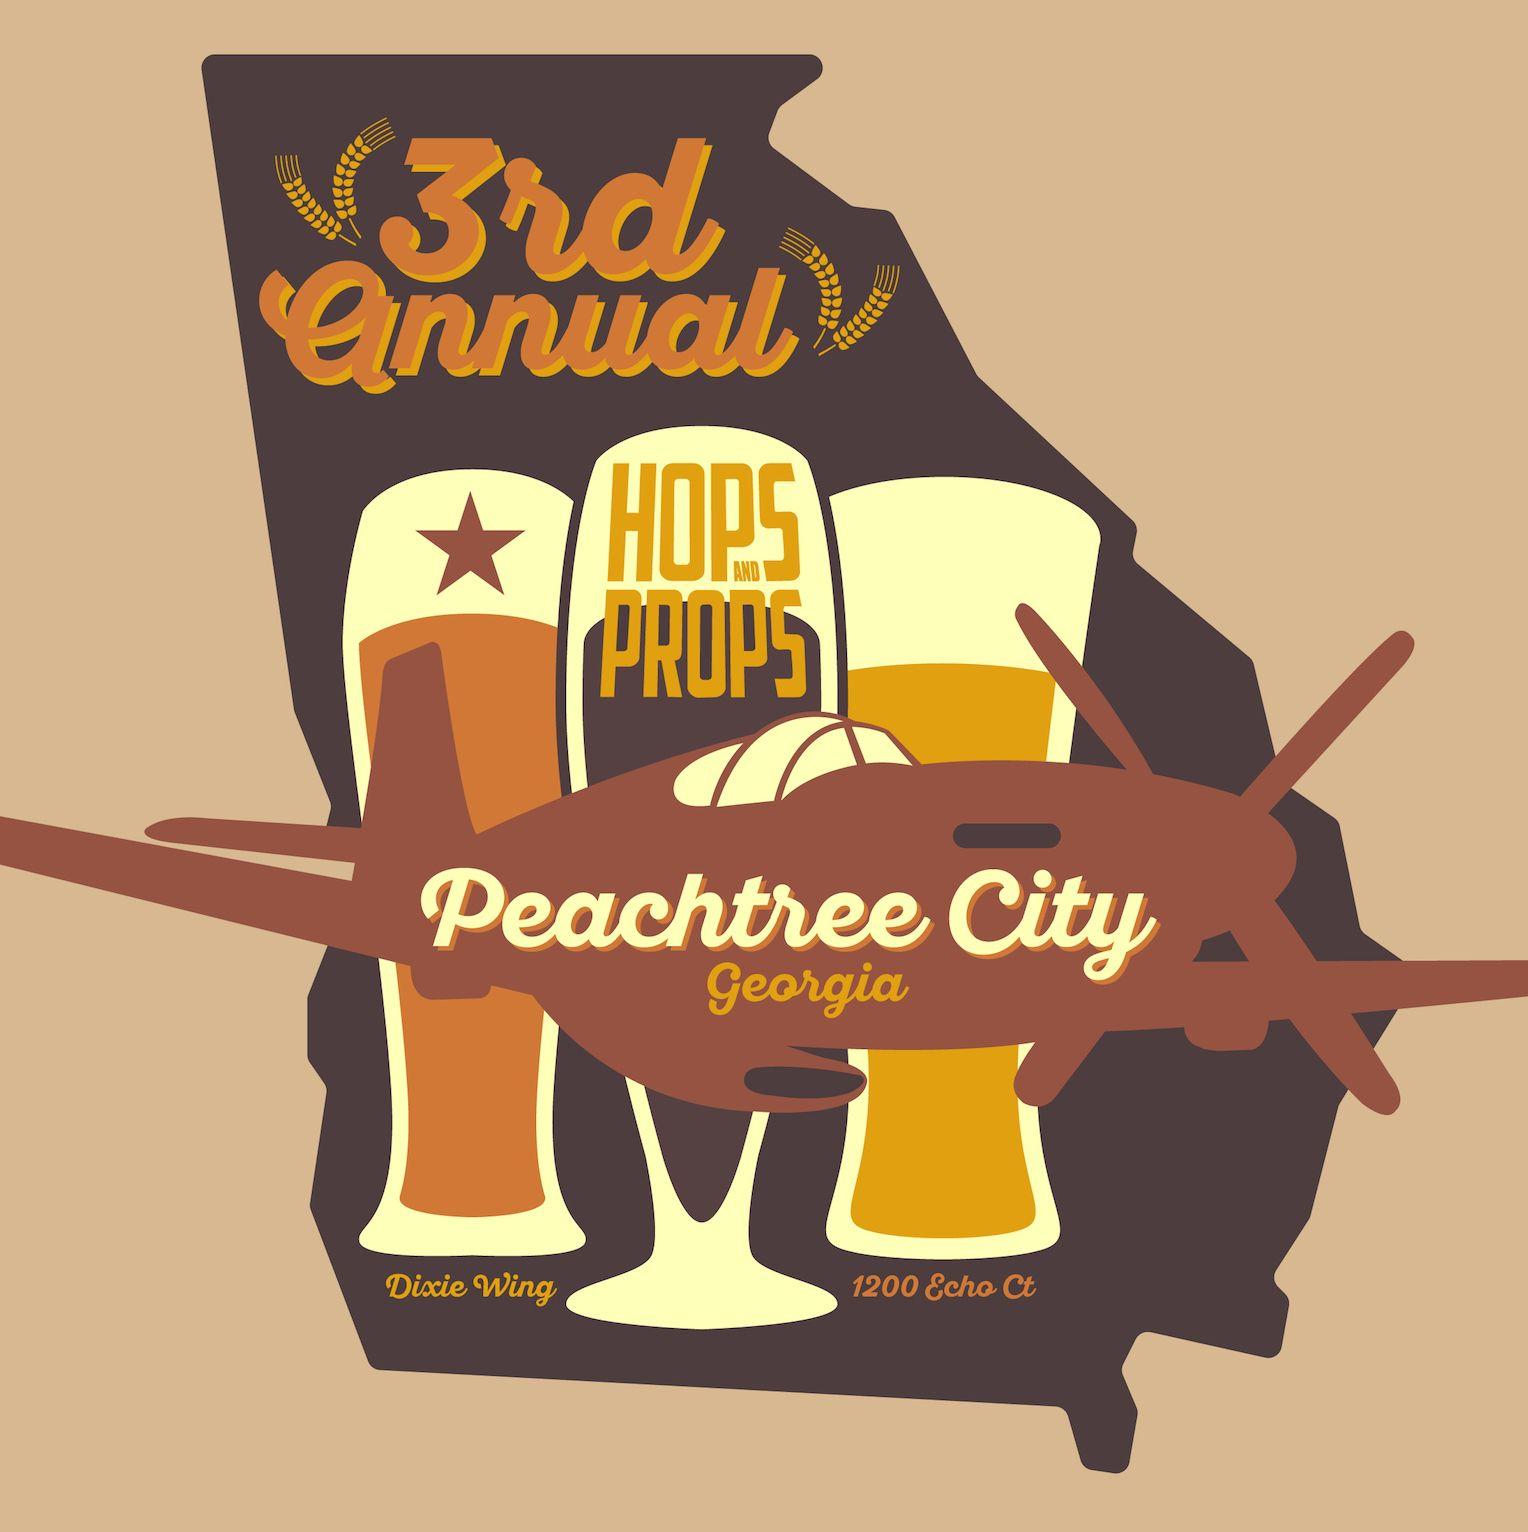 Georgia Beer Logo - Hops & Props Georgia Beer Fest City, Georgia Convention